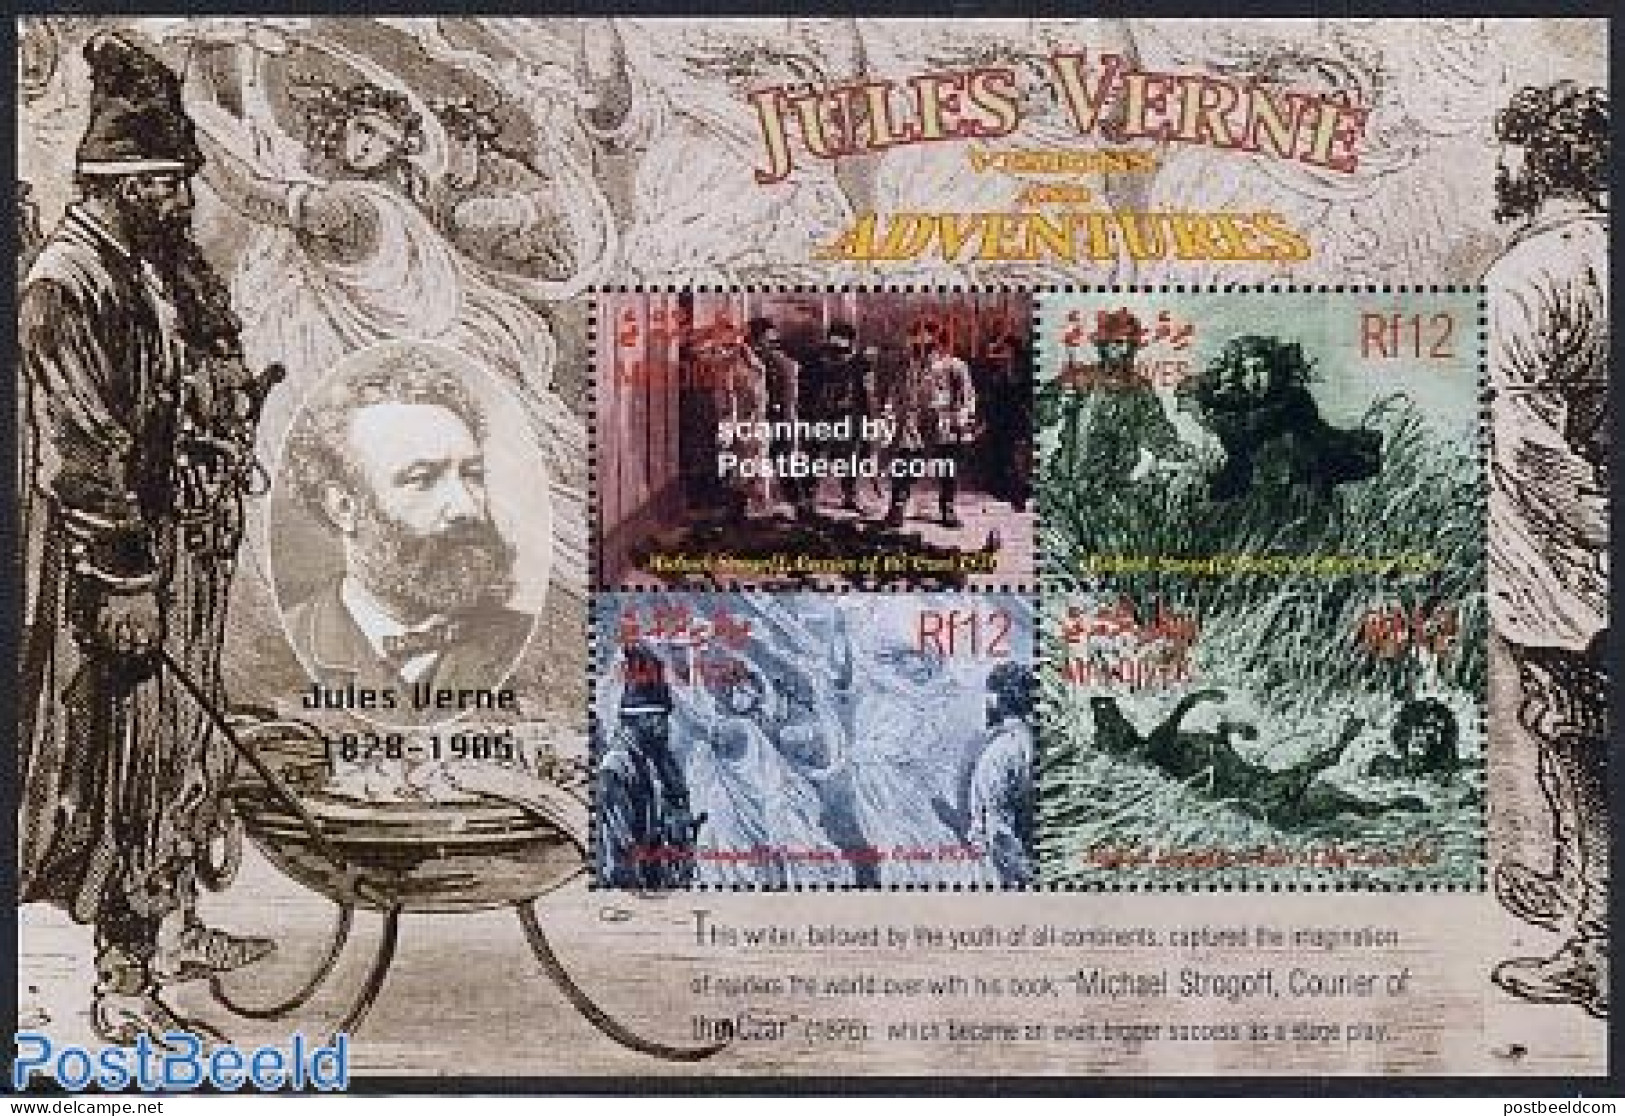 Maldives 2004 Jules Verne 4v M/s, Michael Strogoff, Mint NH, Art - Authors - Jules Verne - Science Fiction - Escritores